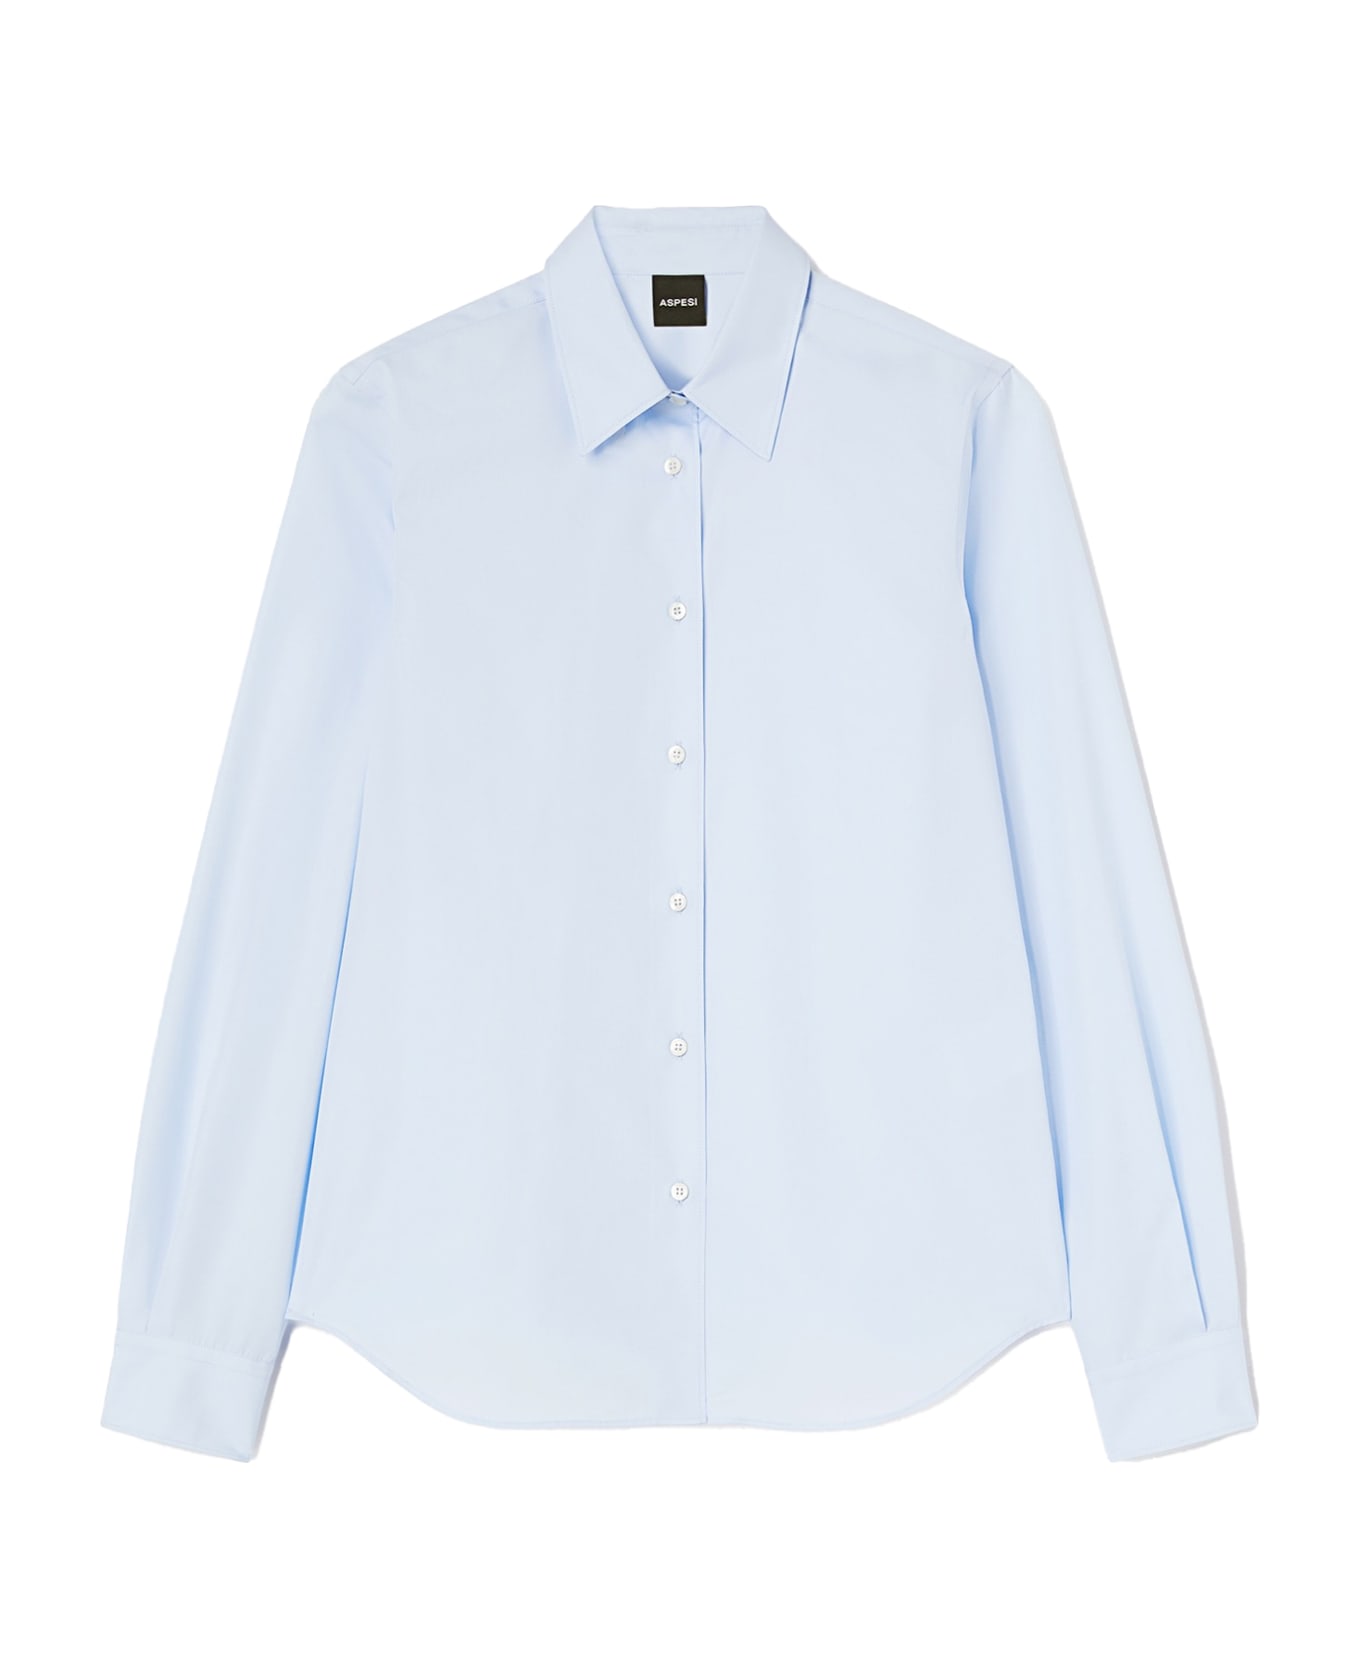 Aspesi Light Blue Shirt With Long Sleeves - AZZURRO